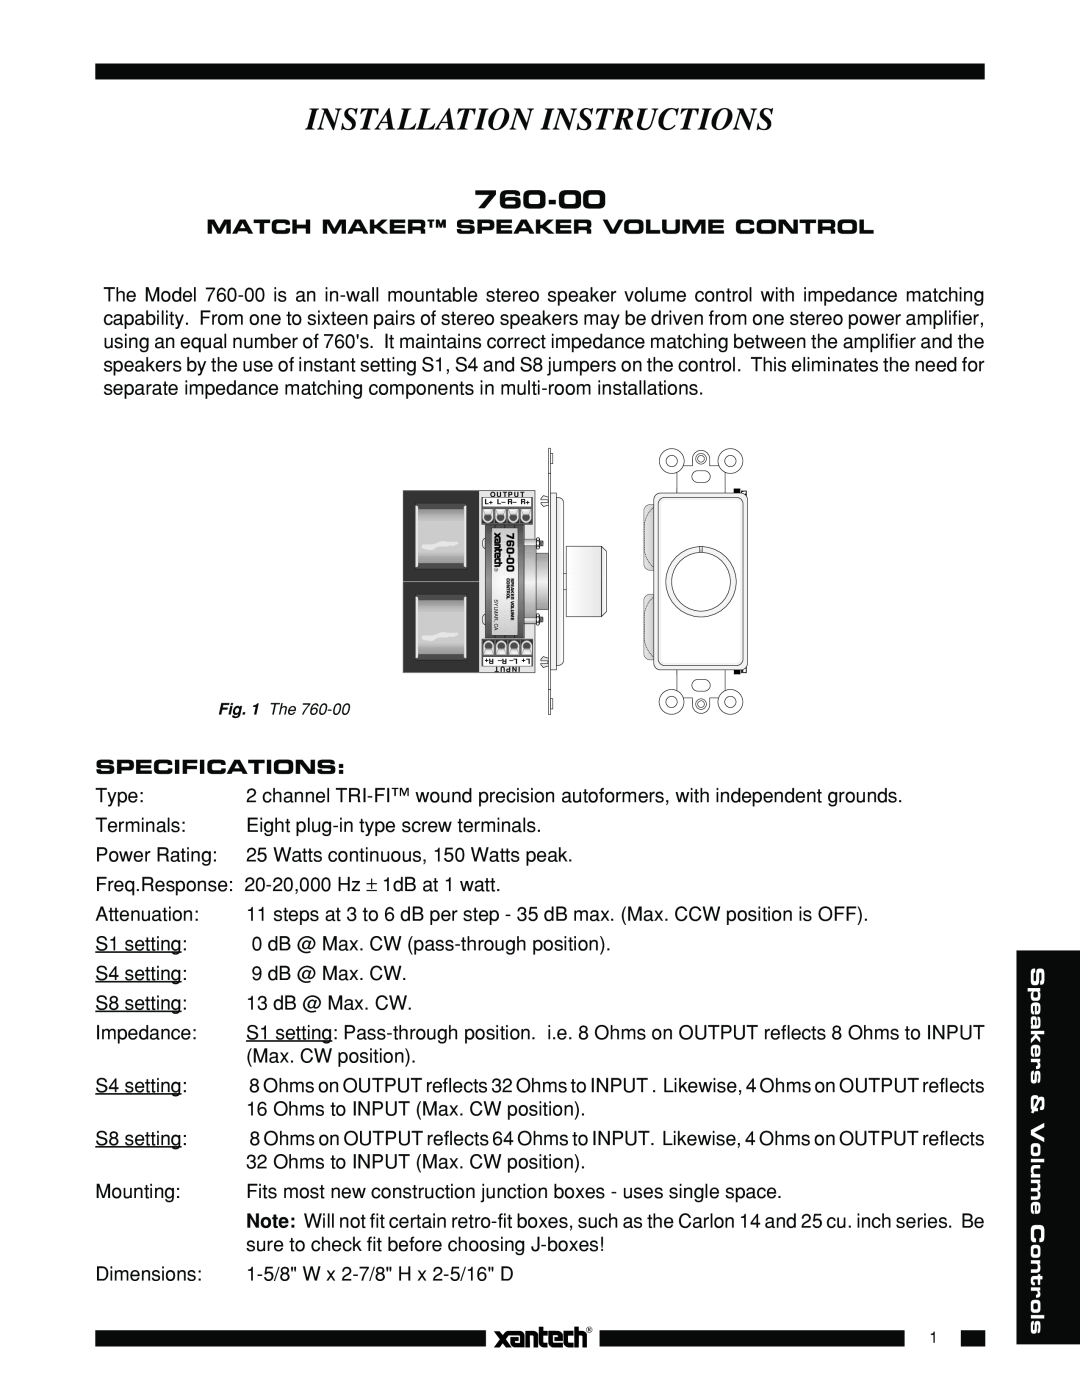 Xantech 760-00 installation instructions Match Maker Speaker Volume Control, Specifications, Installation Instructions 